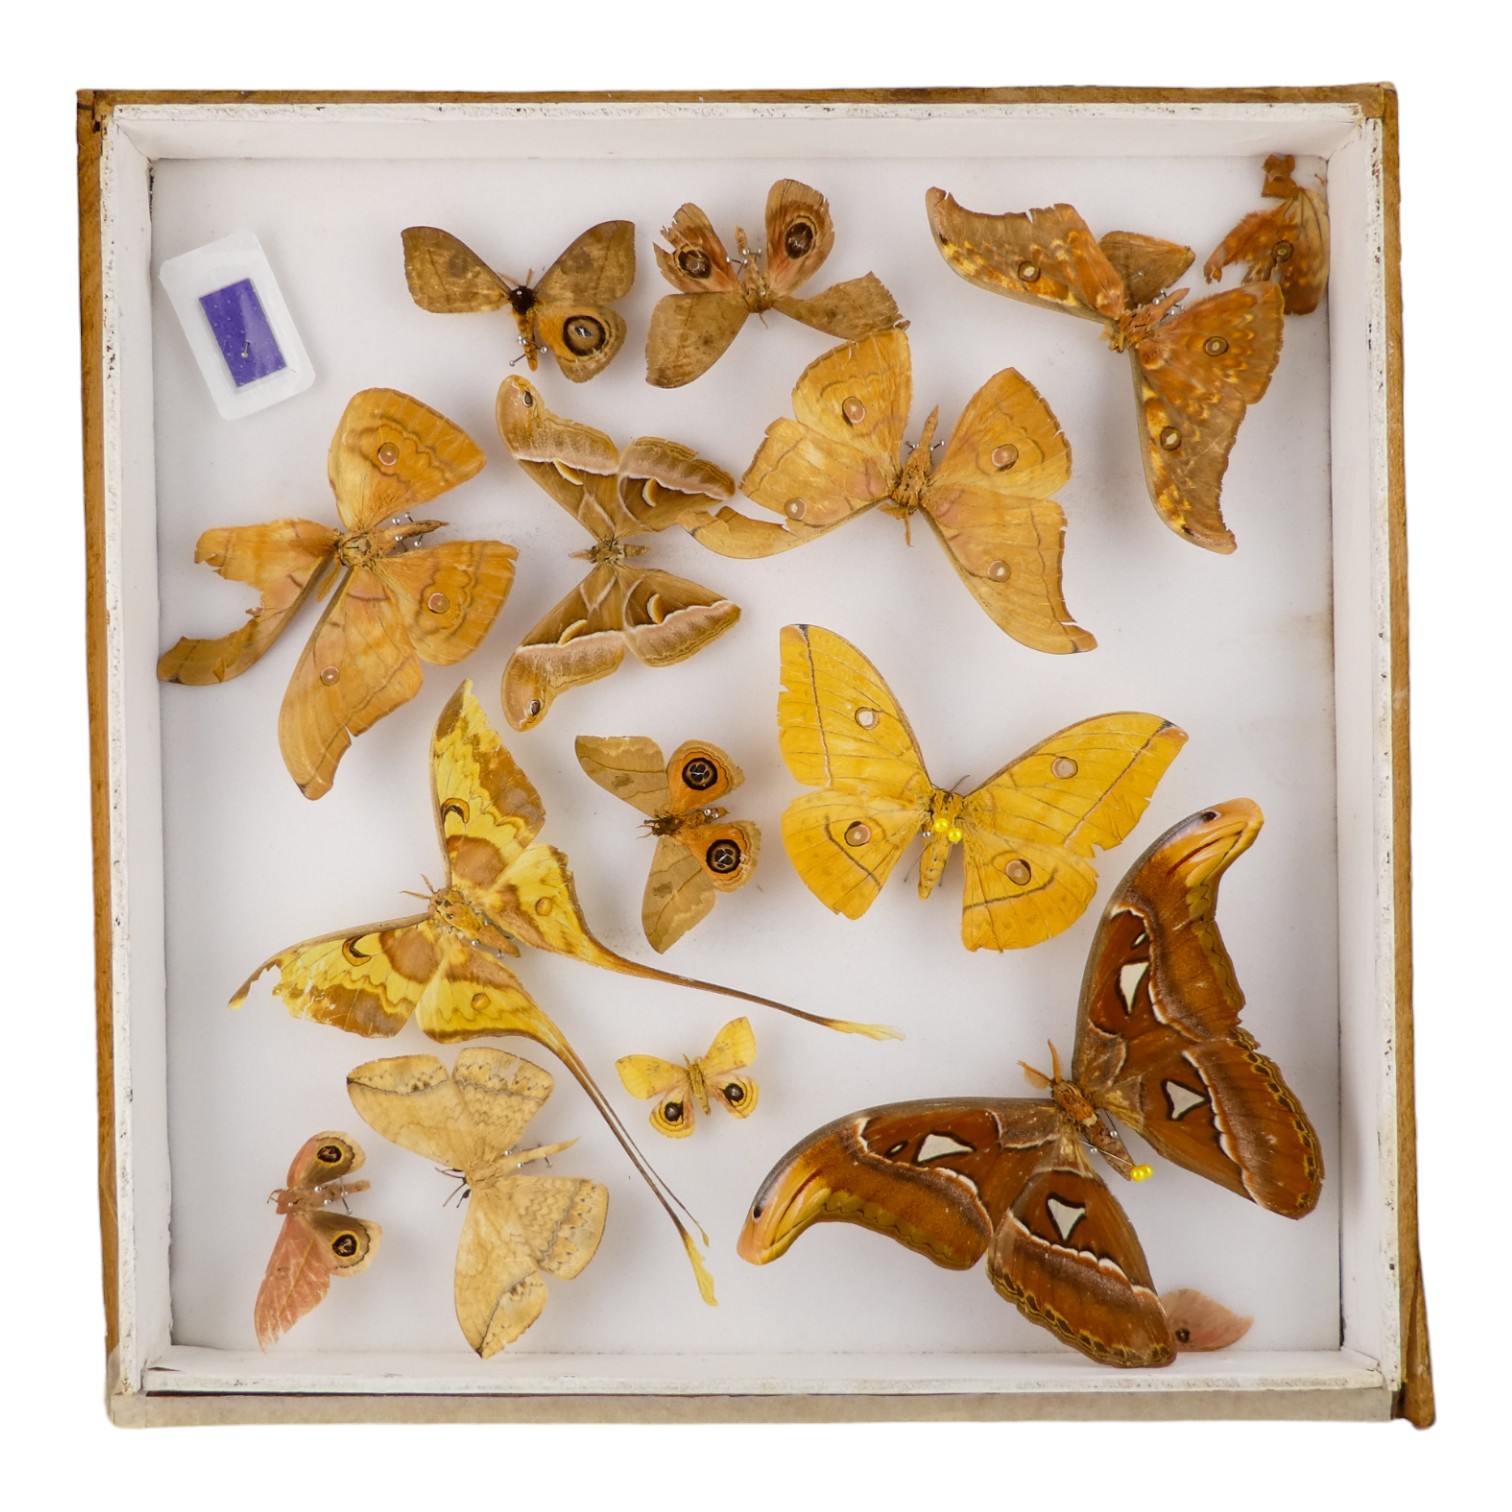 A case of moths randomly set - including Atlas, Squeaking Silkmoth, Malaysian Moon Moth